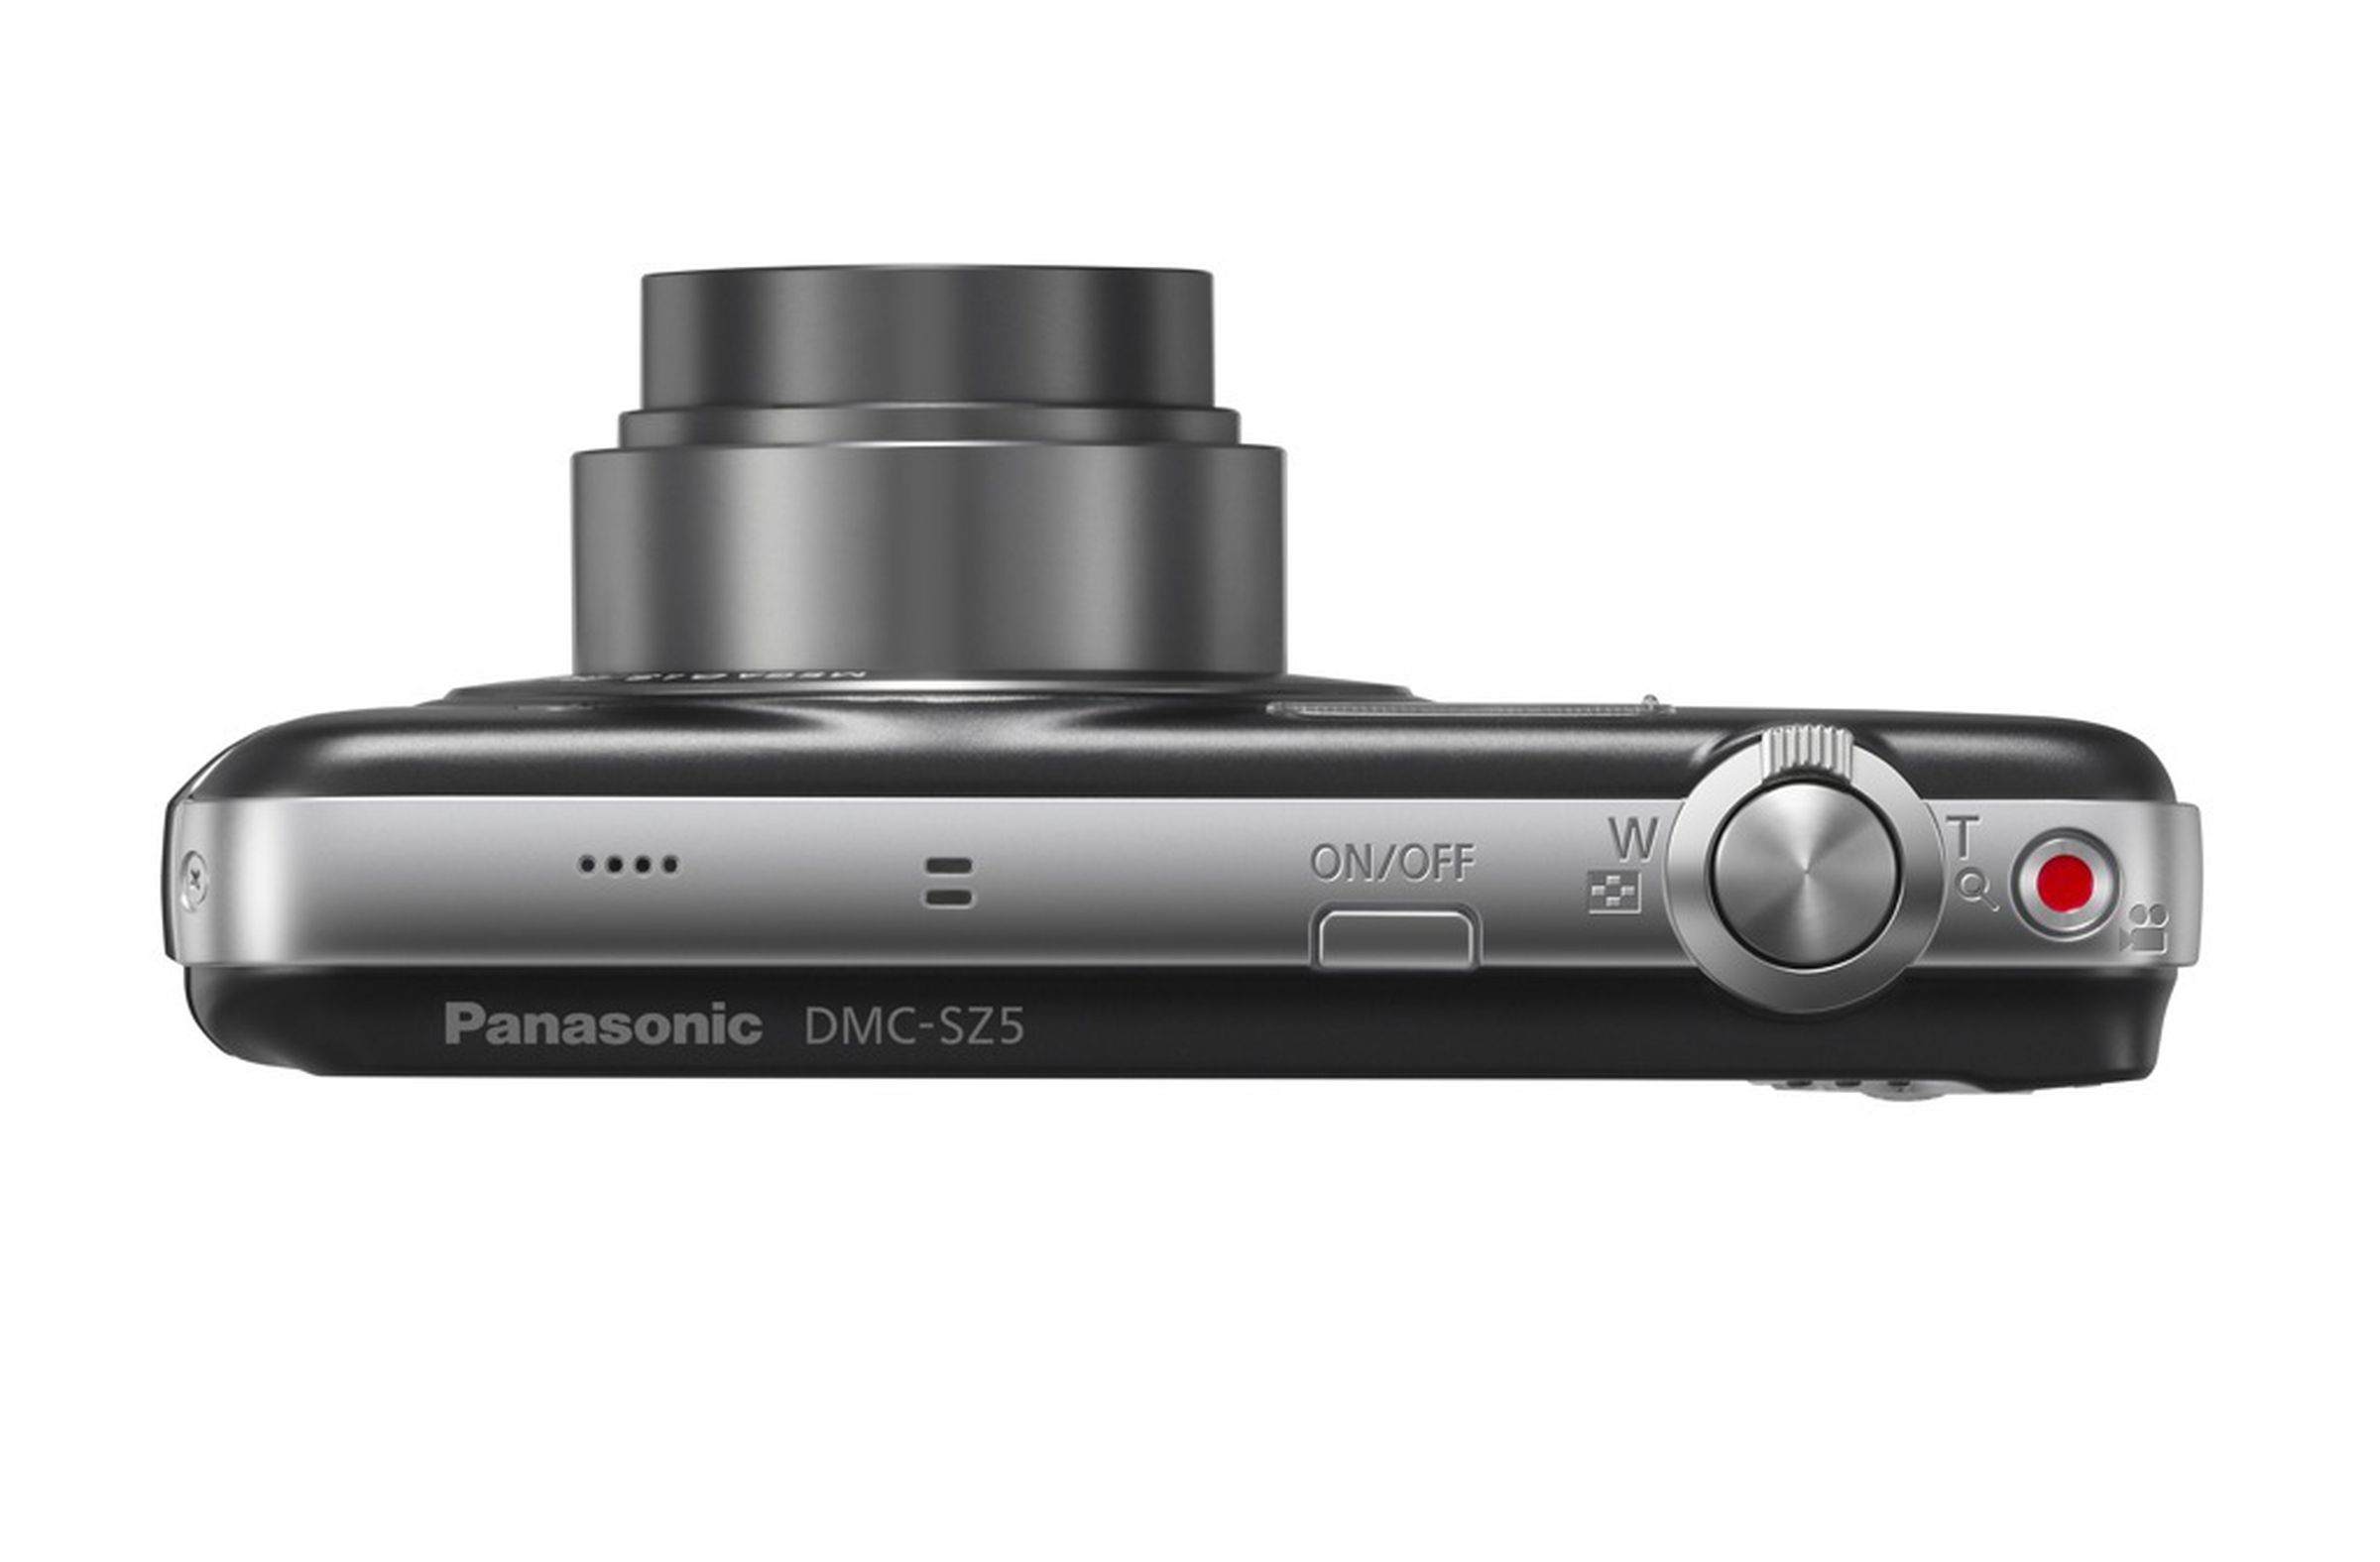 Panasonic Lumix refresh pictures